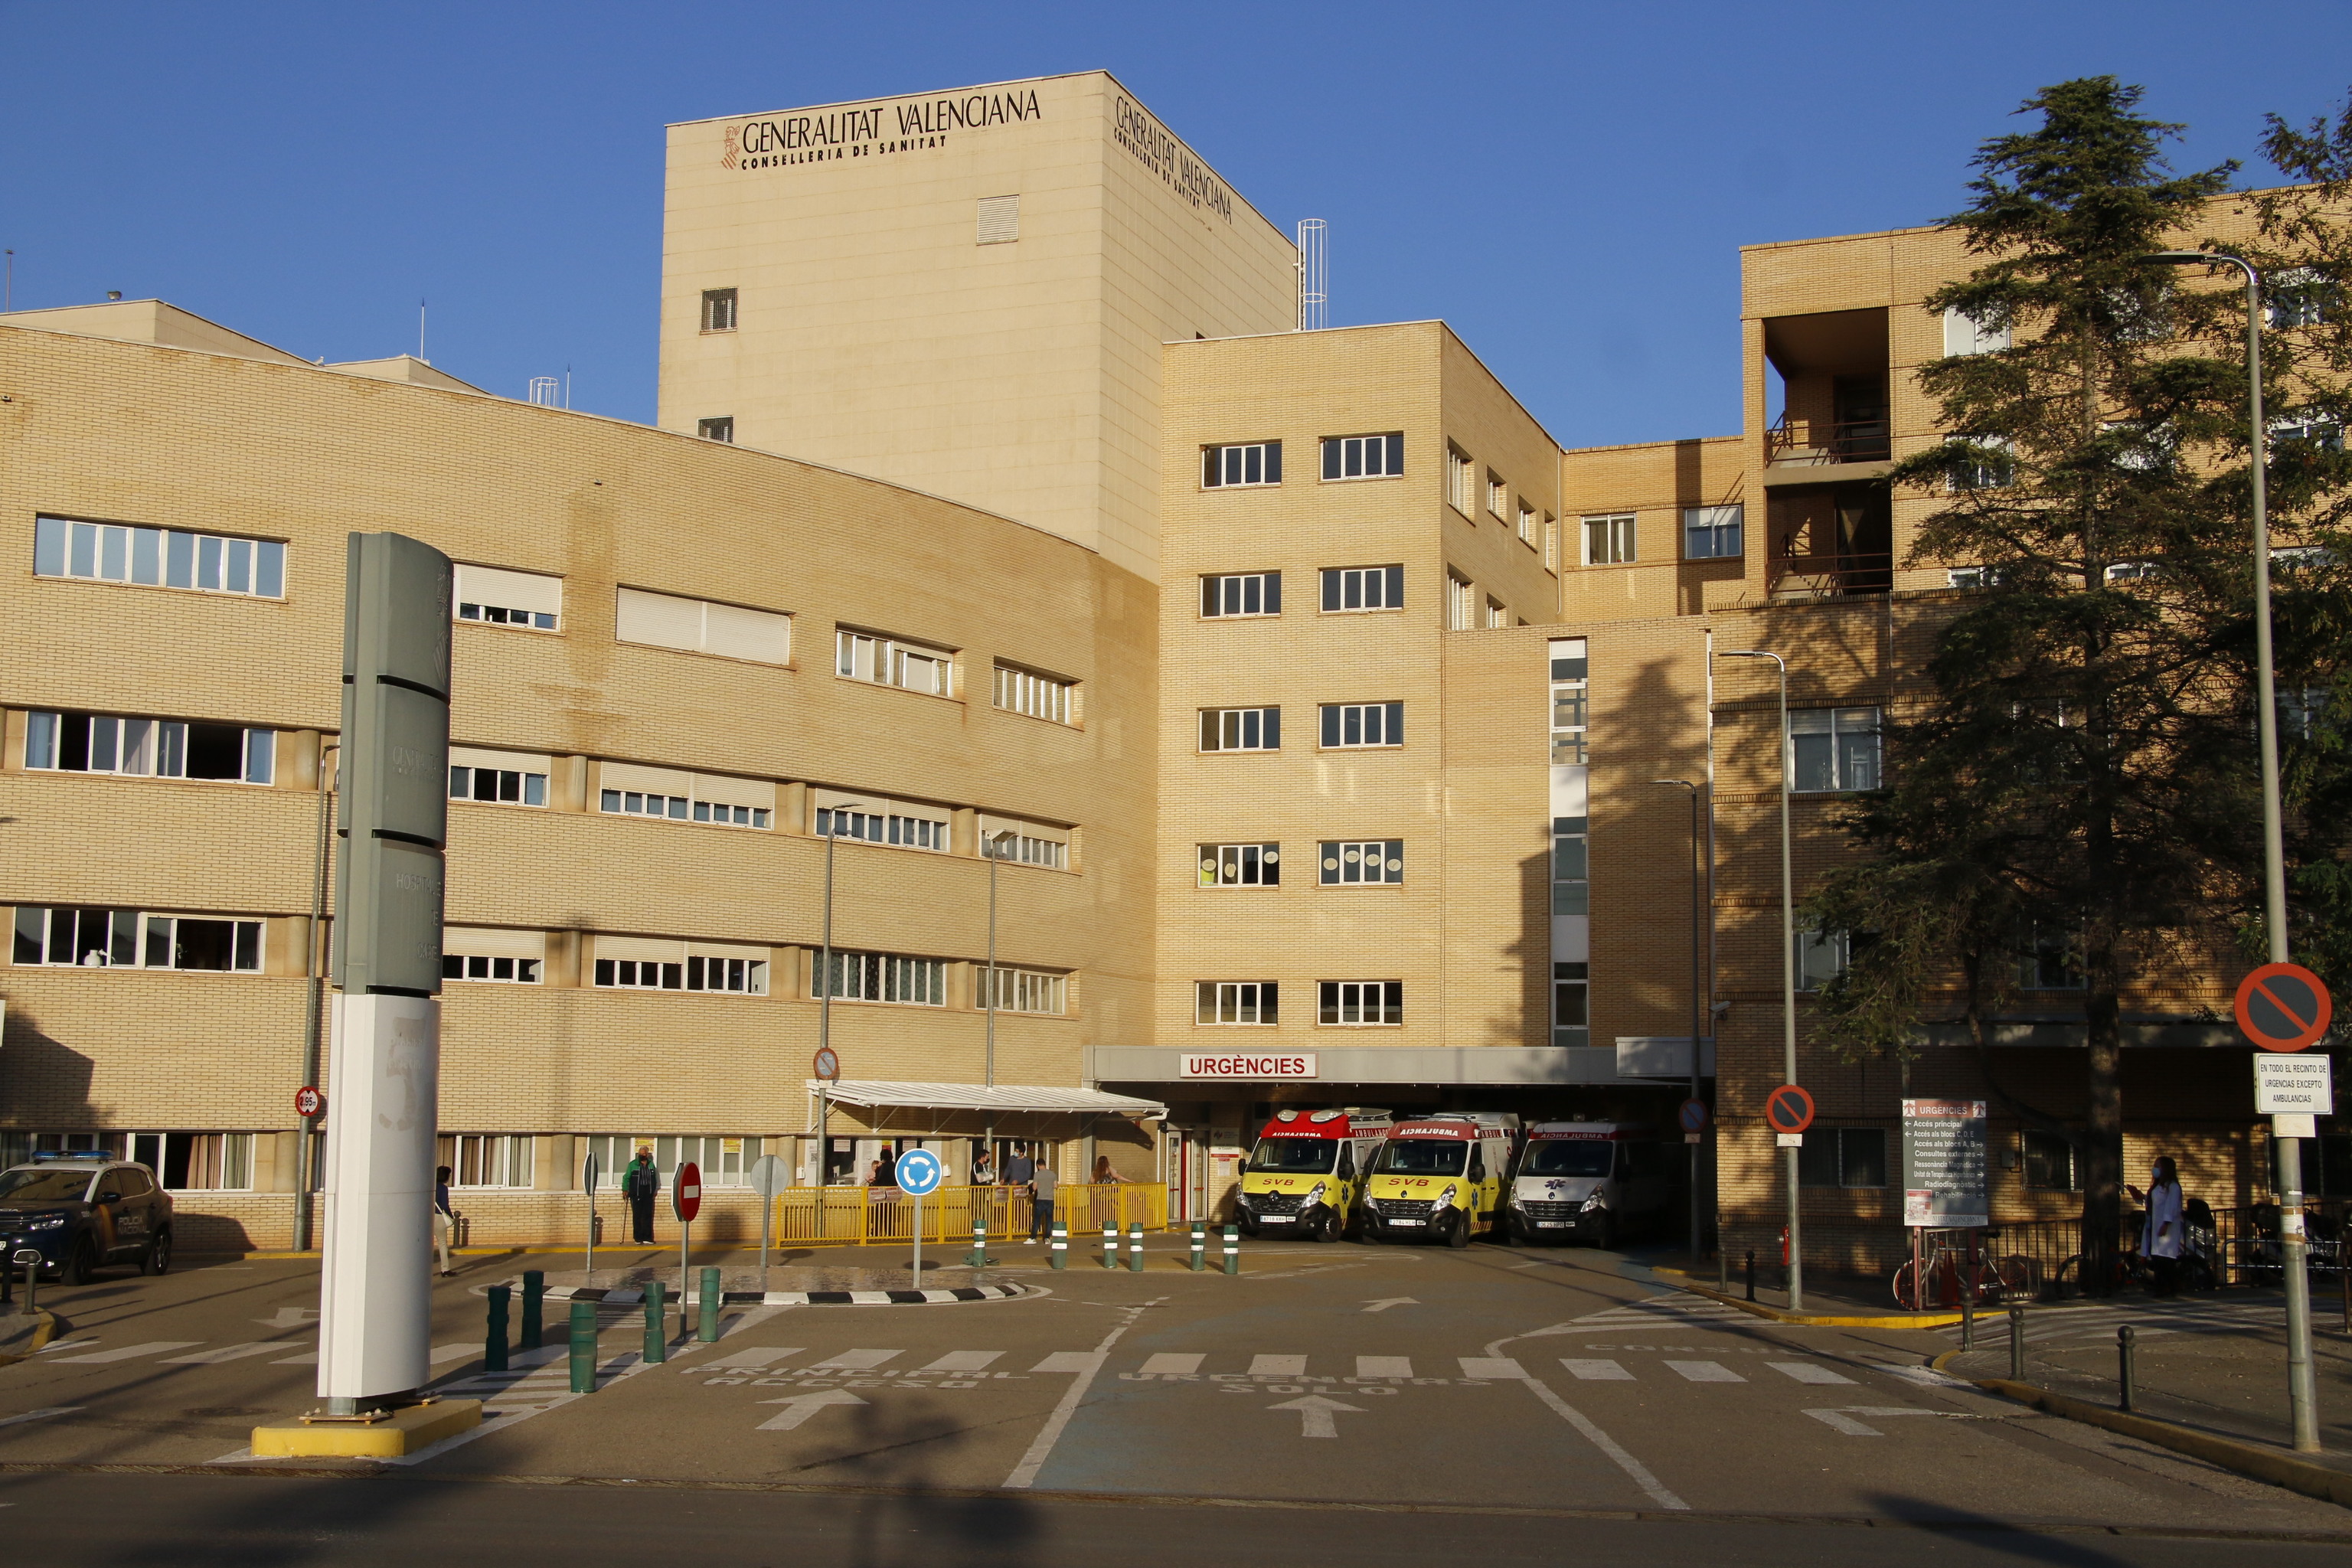 Acceso a Urgencias del Hospital General de Castelln.